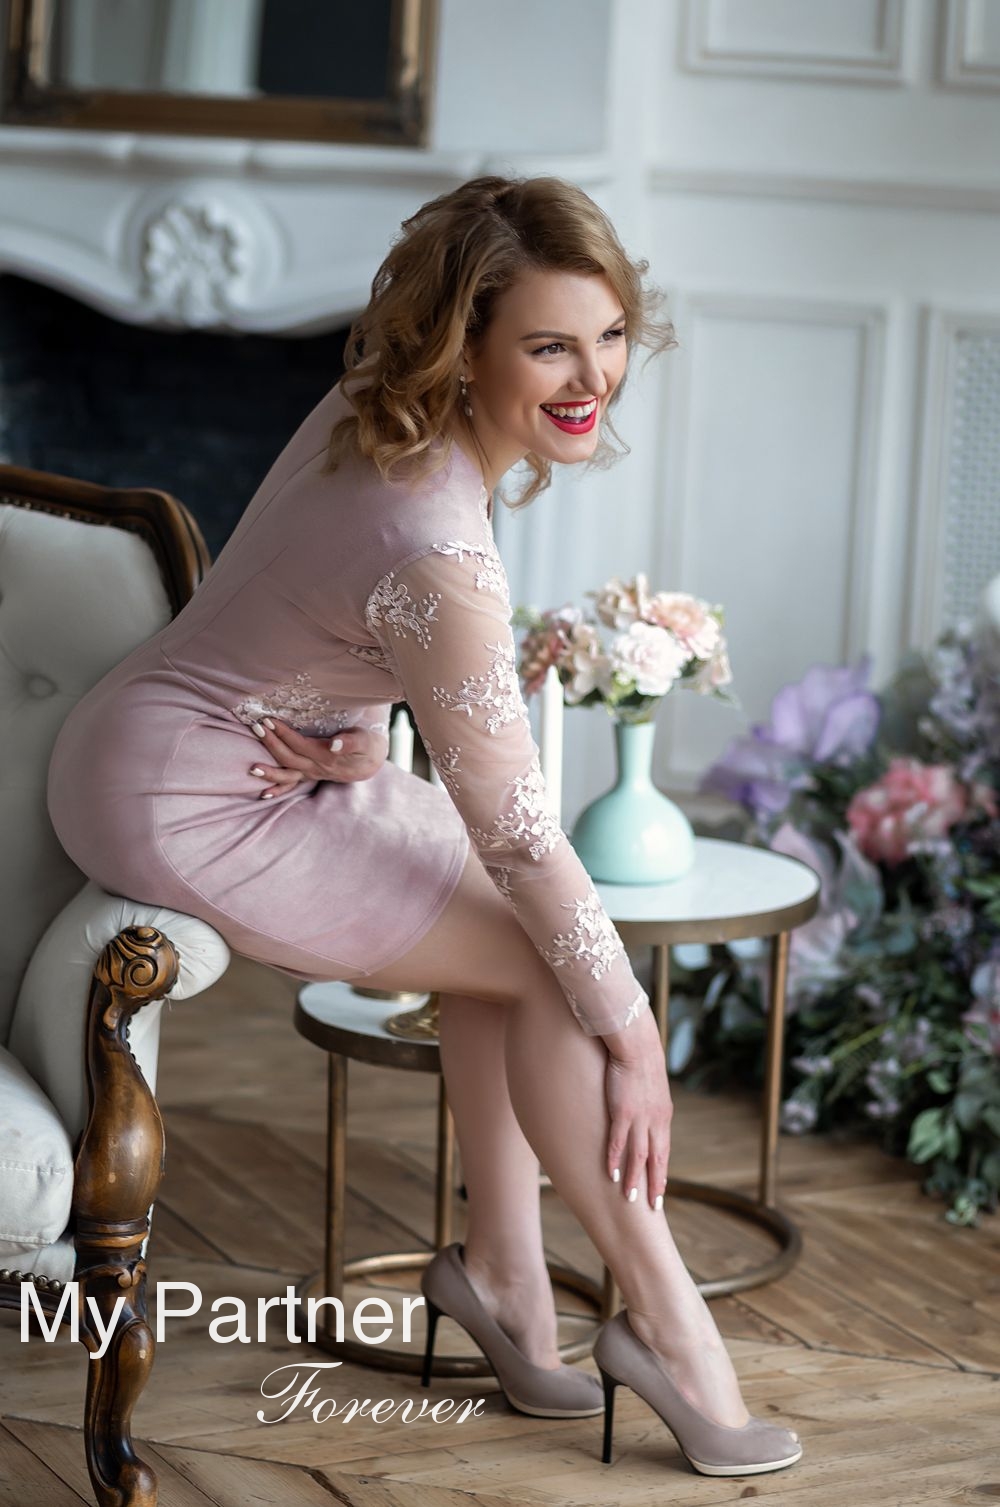 Dating Service to Meet Stunning Ukrainian Woman Elena from Kharkov, Ukraine